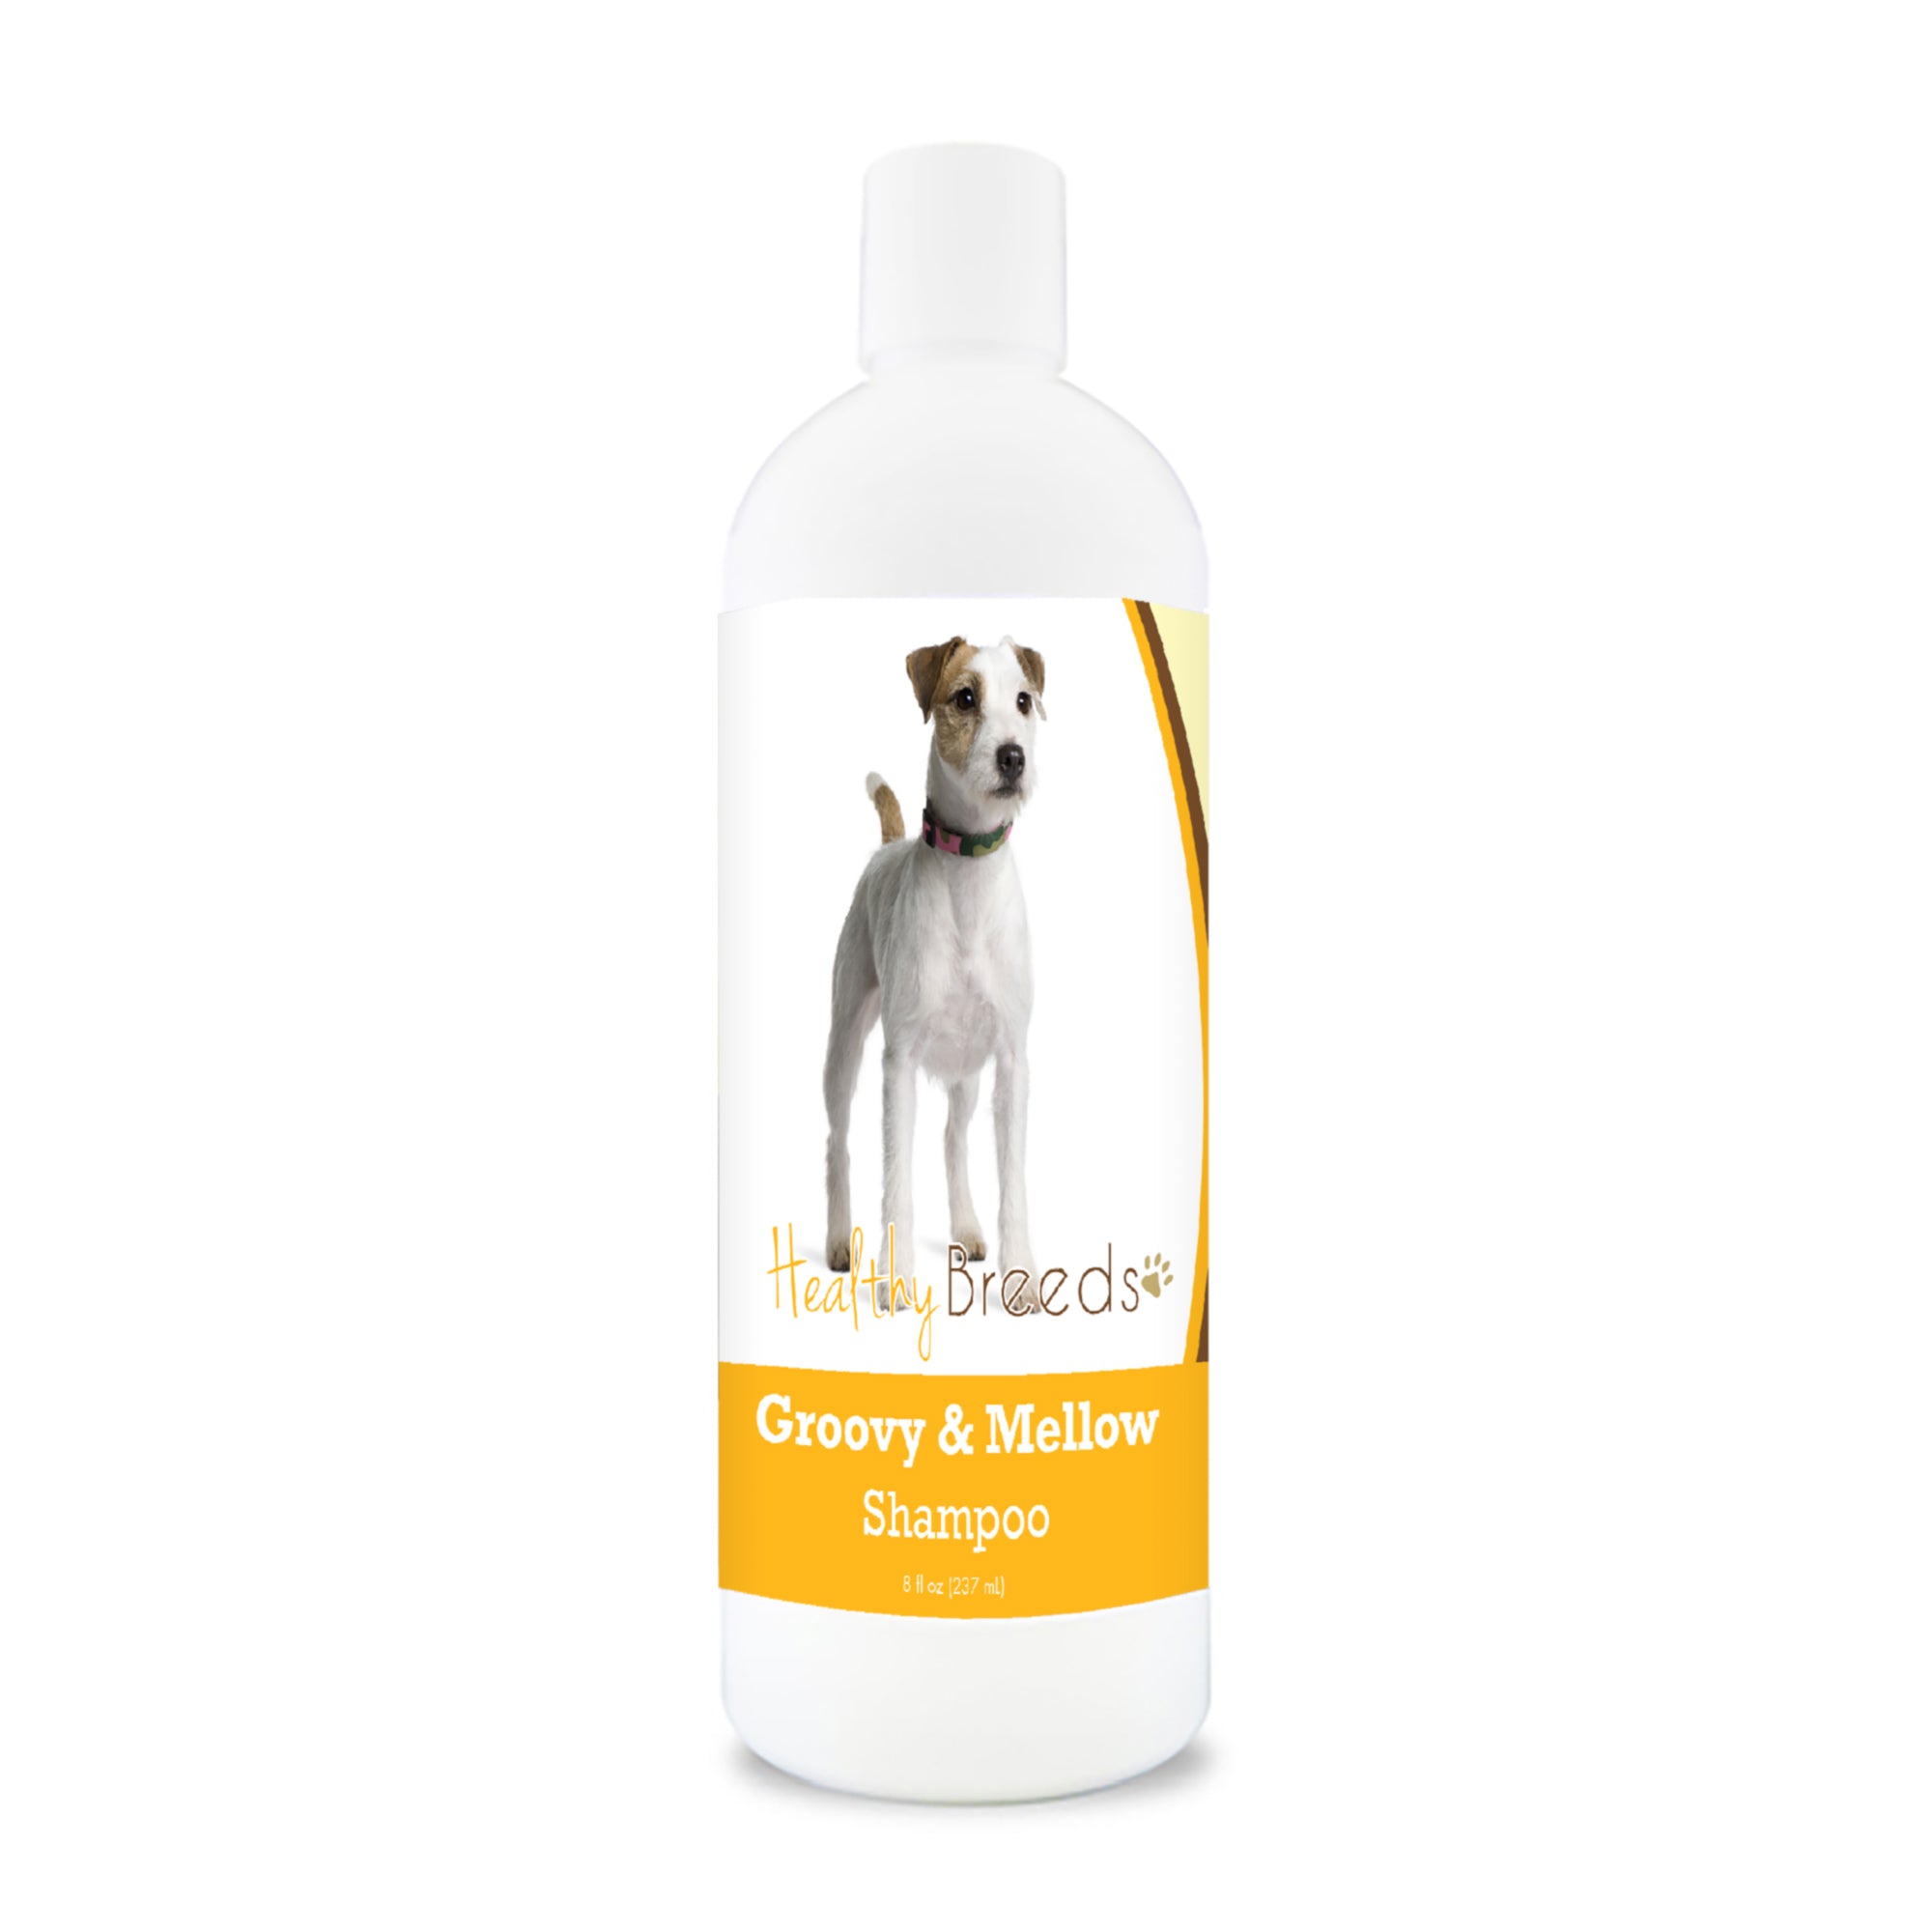 Parson Russell Terrier Groovy & Mellow Shampoo 8 oz